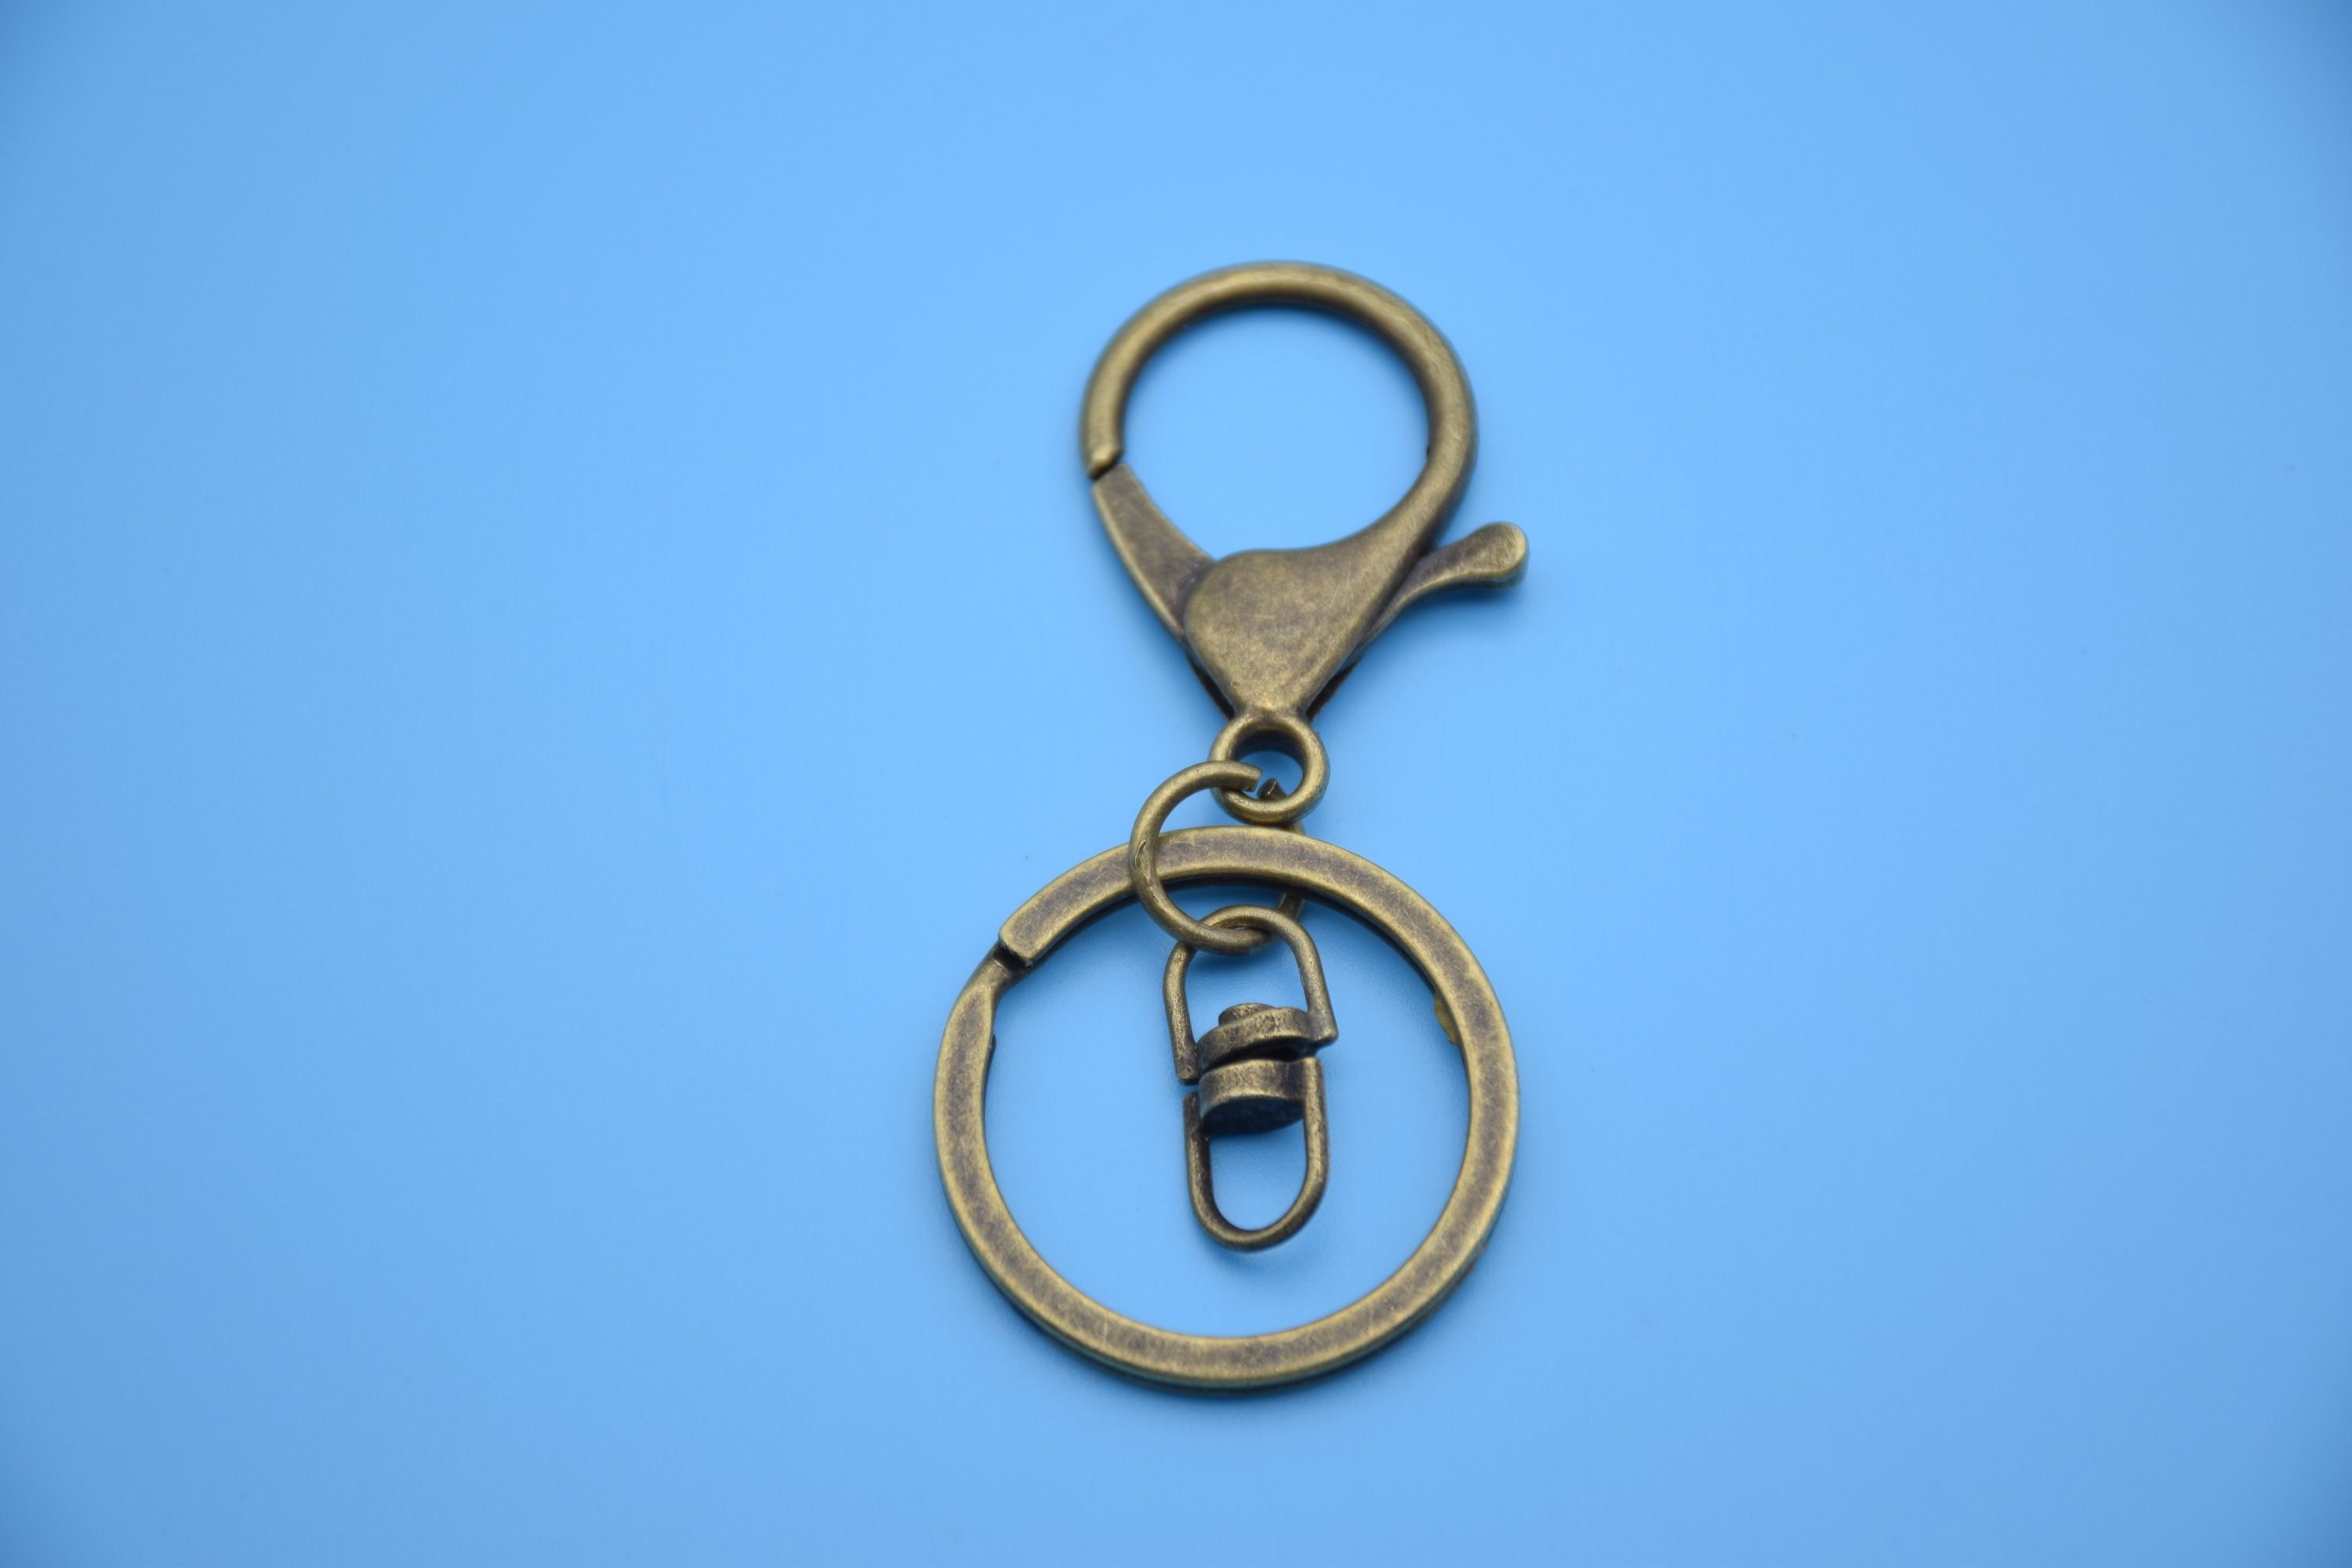 10pcs/lot Classic Key Chain Ring Metal Swivel Lobster Clasp Clips Key Hooks  Keychain Split Ring